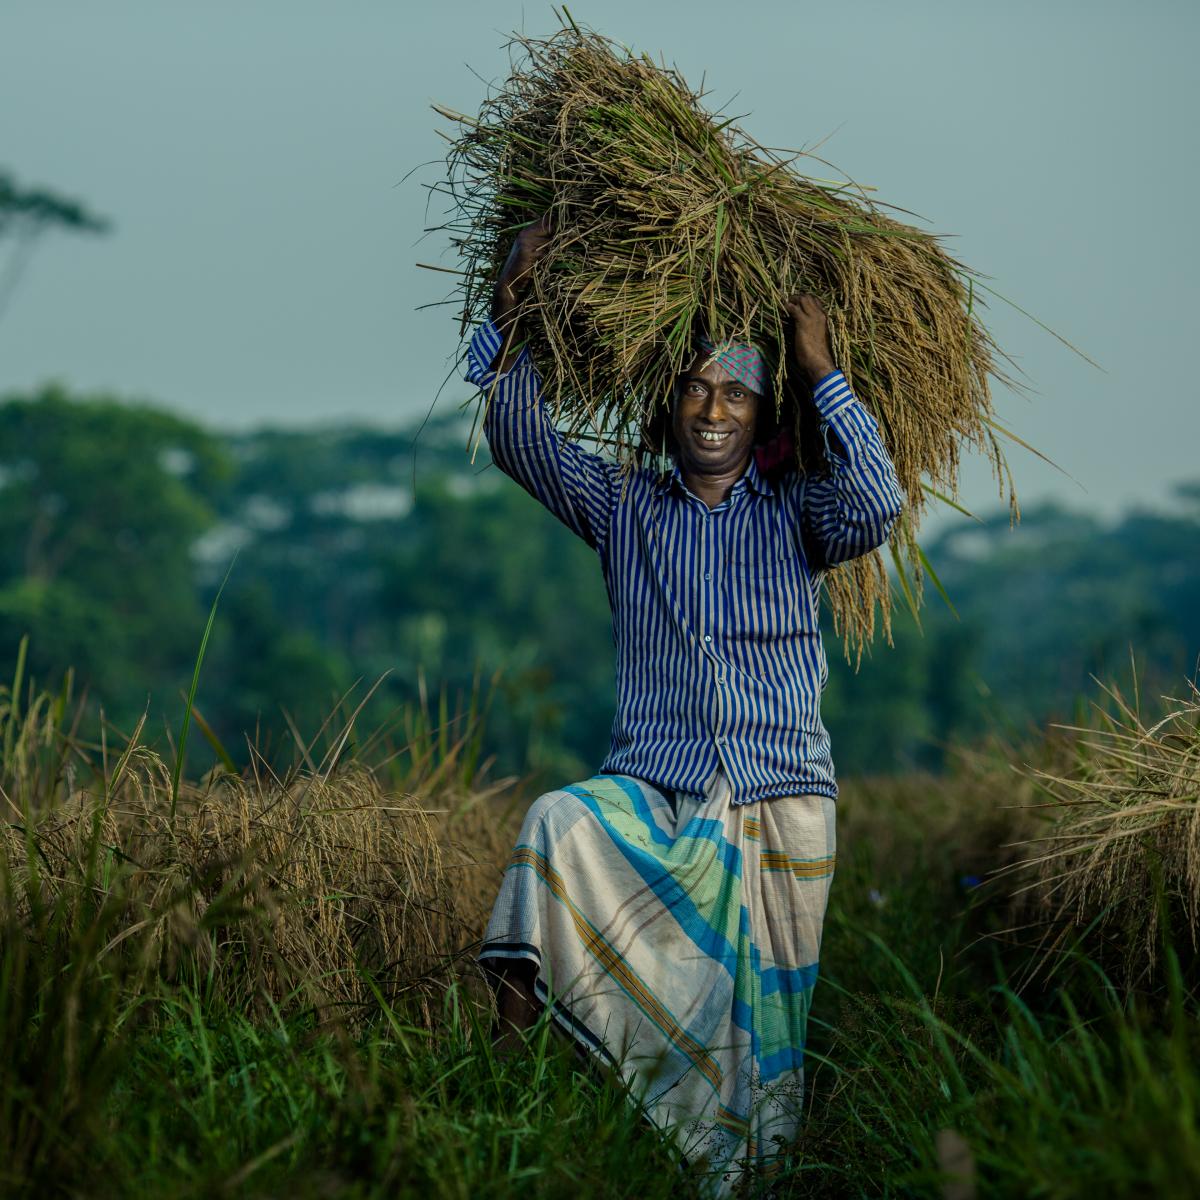 Taroni Kanta Shikari poses with a bundle of rice